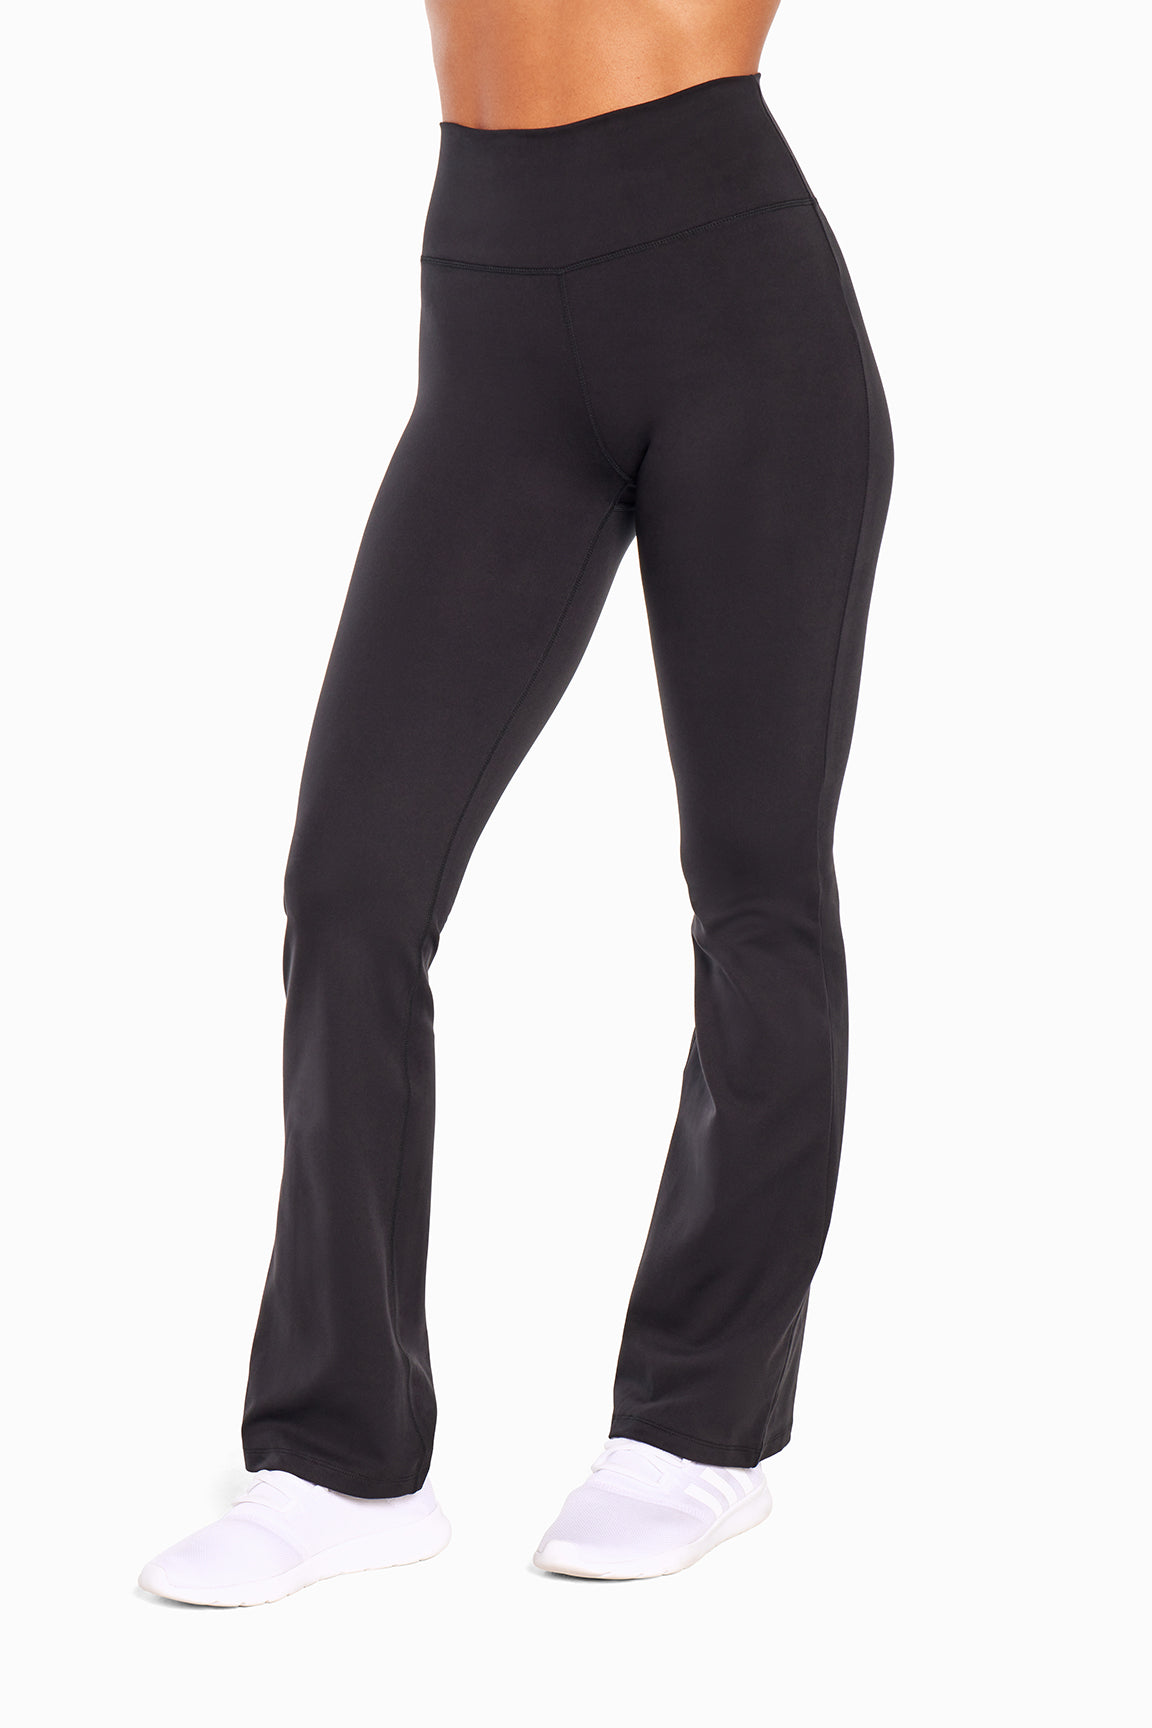 Balance Collection High Waist Black Yoga Pants Womens Size XL 16